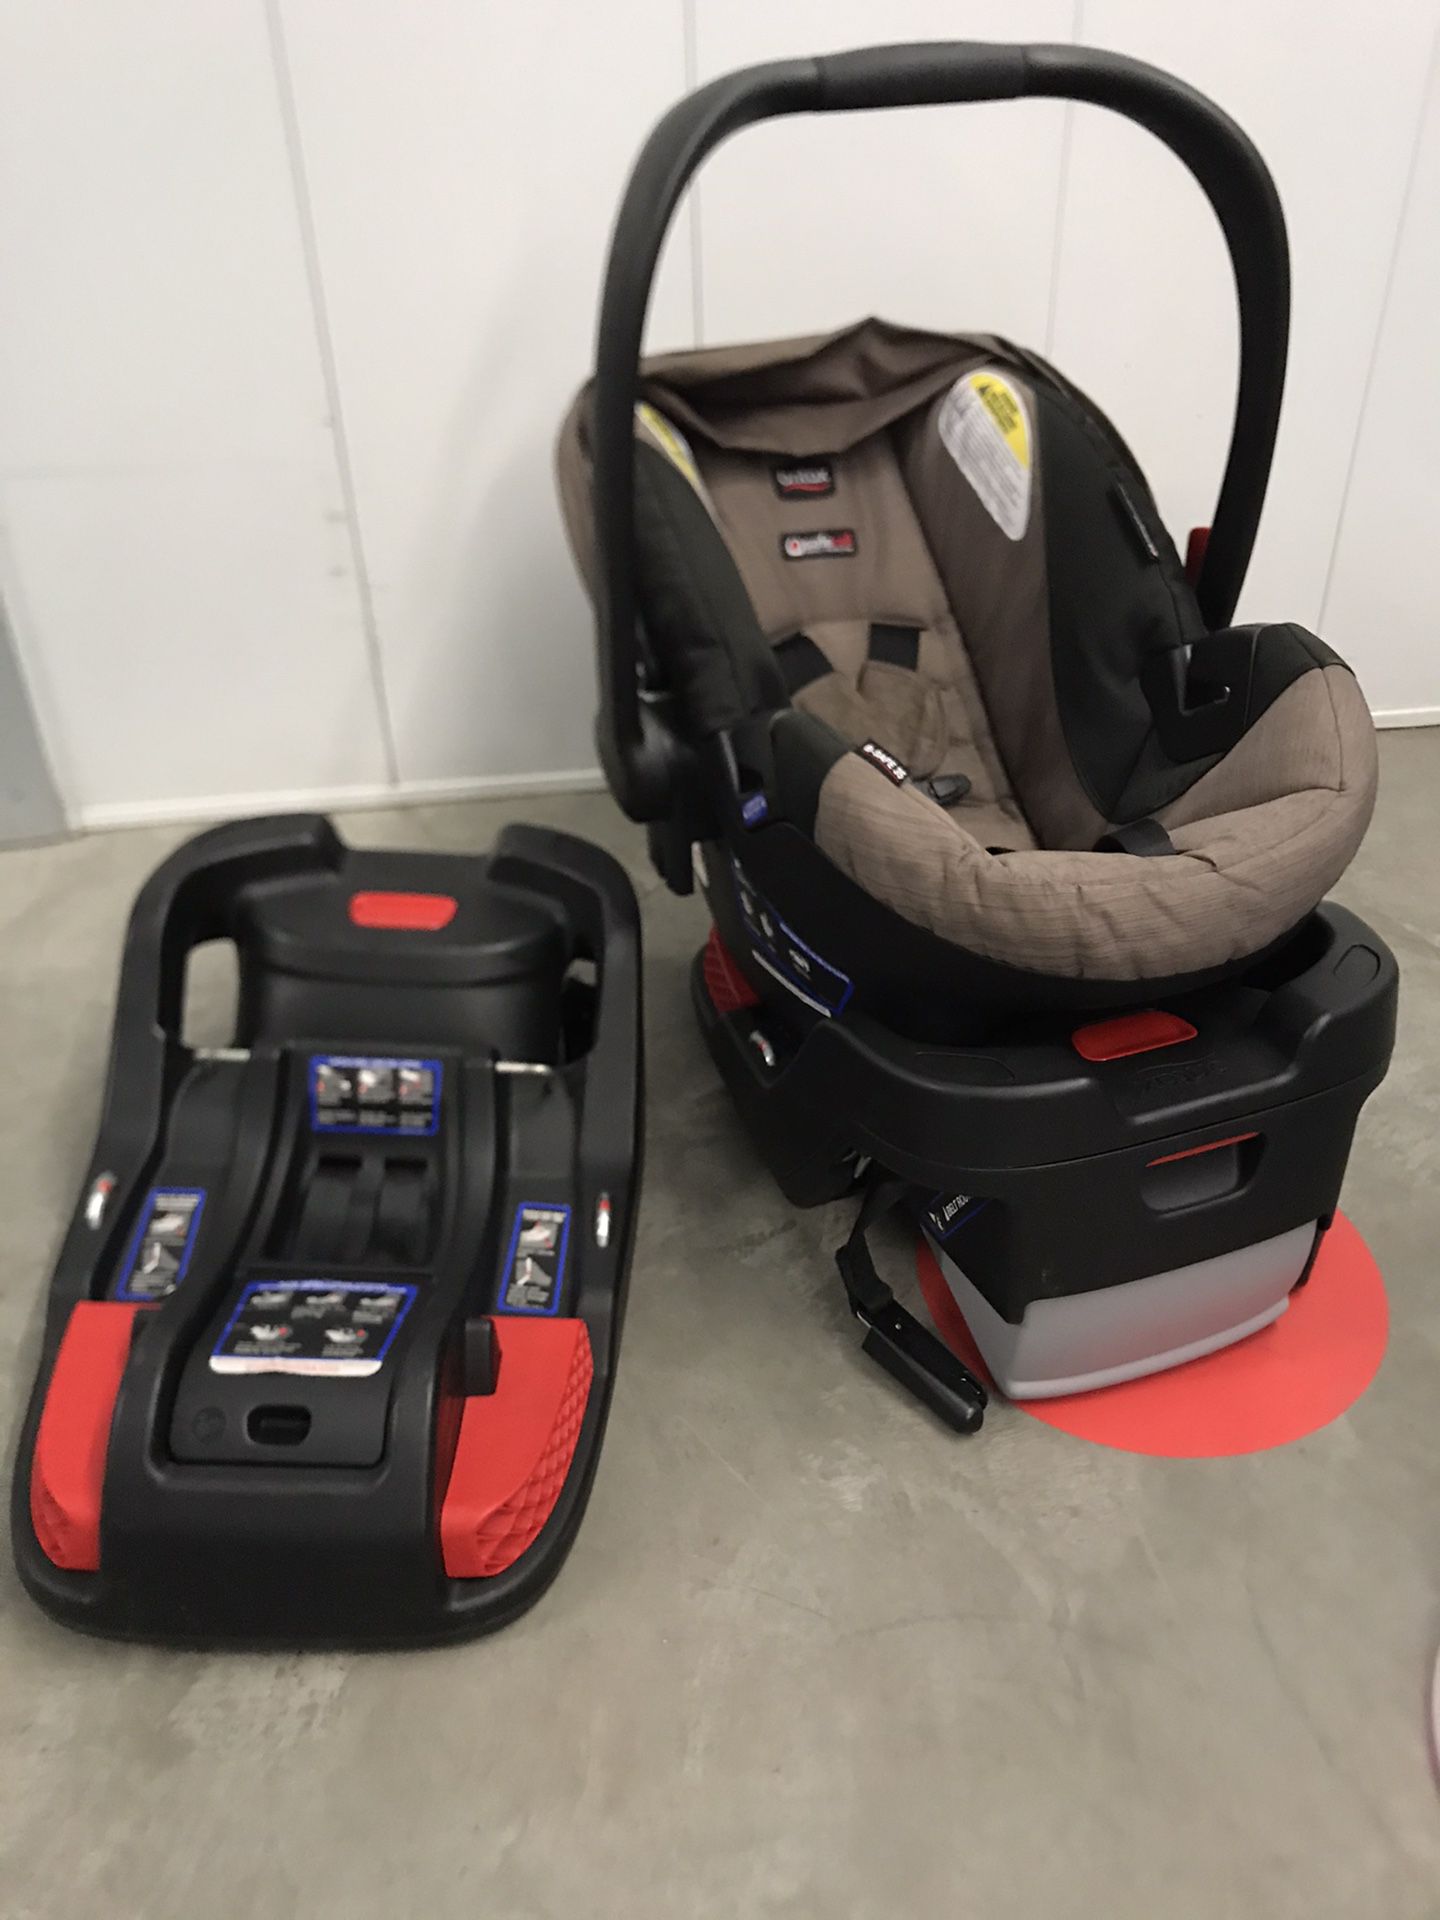 Newborn/toddler “Britax” car seat